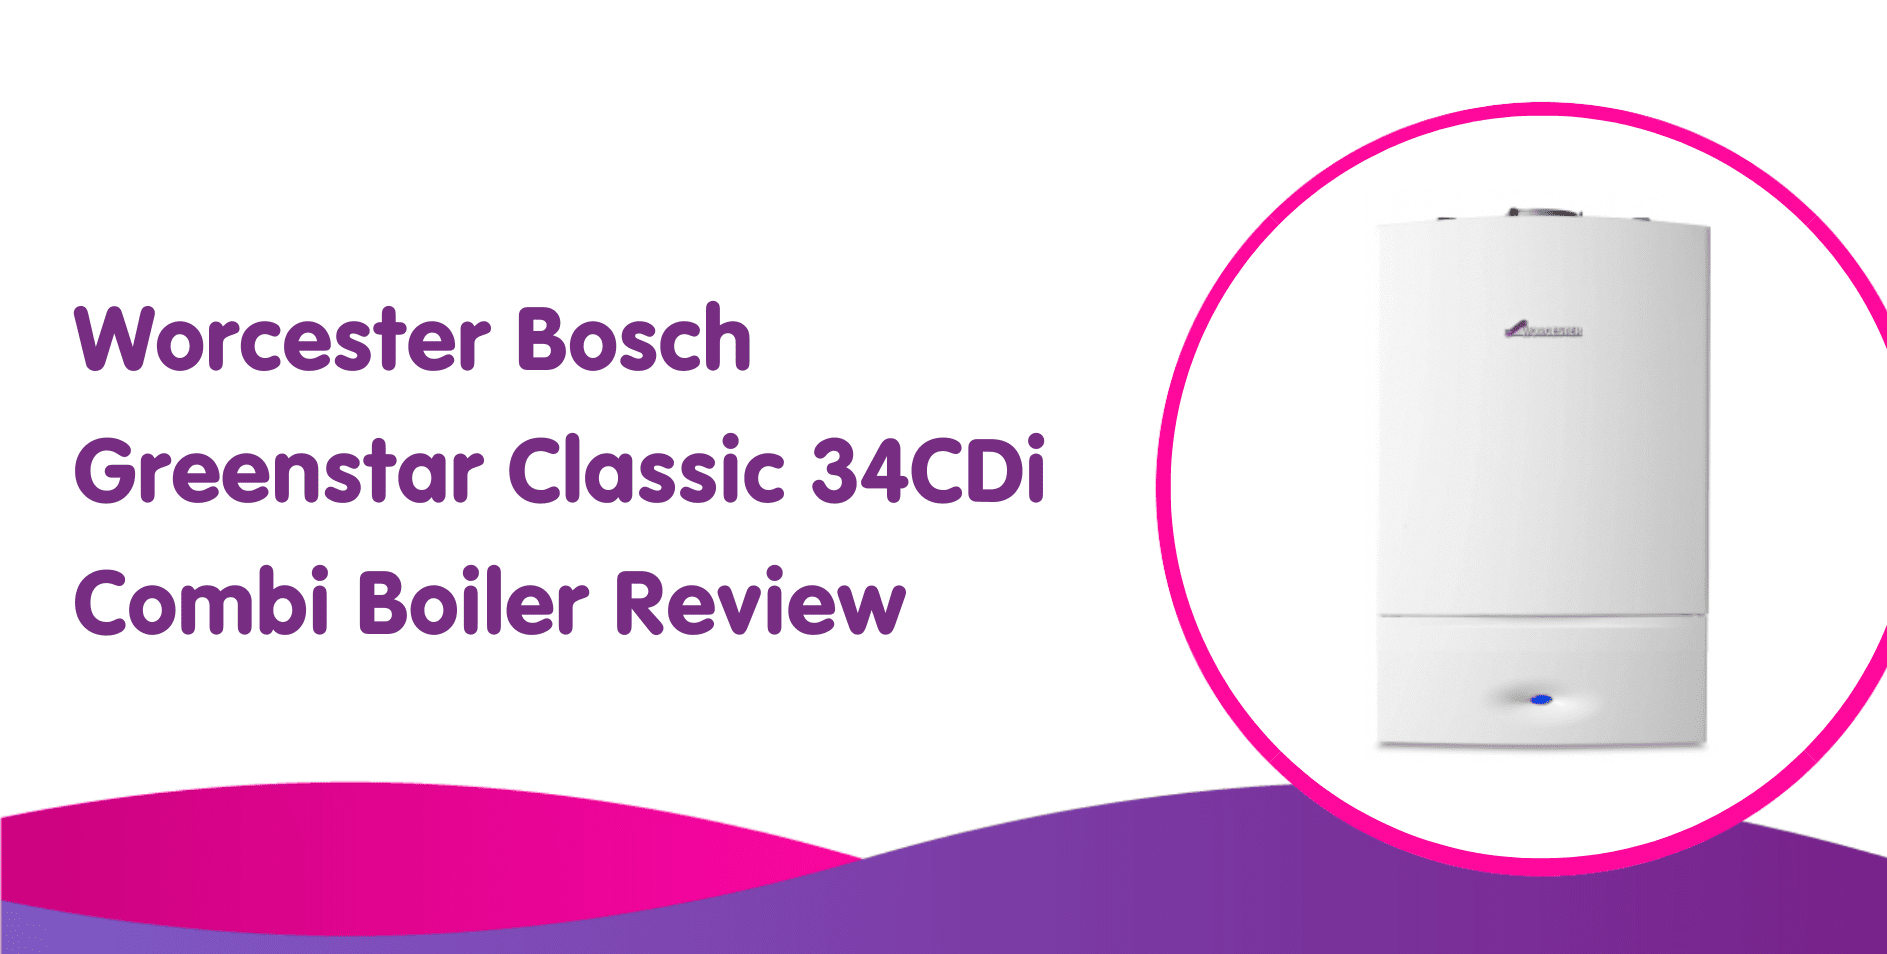 Worcester Bosch Greenstar Classic 34CDi Combi Boiler Review